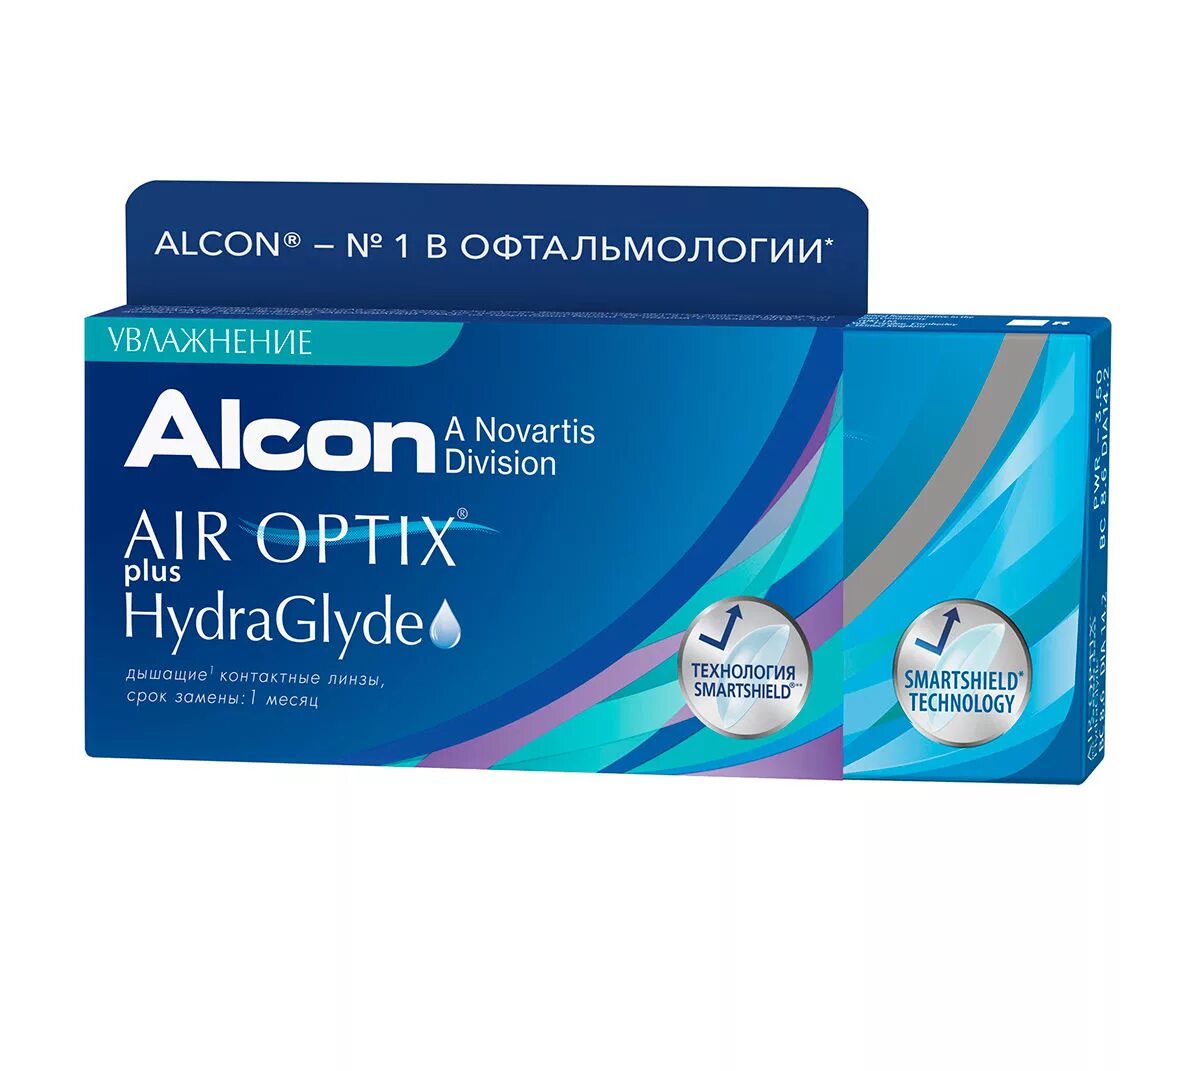 Air Optix (Alcon) Aqua (6 линз). Air Optix (Alcon) Plus HYDRAGLYDE (6 линз). Air Optix Plus HYDRAGLYDE 3 линзы. Air Optix (Alcon) Aqua (3 линзы).